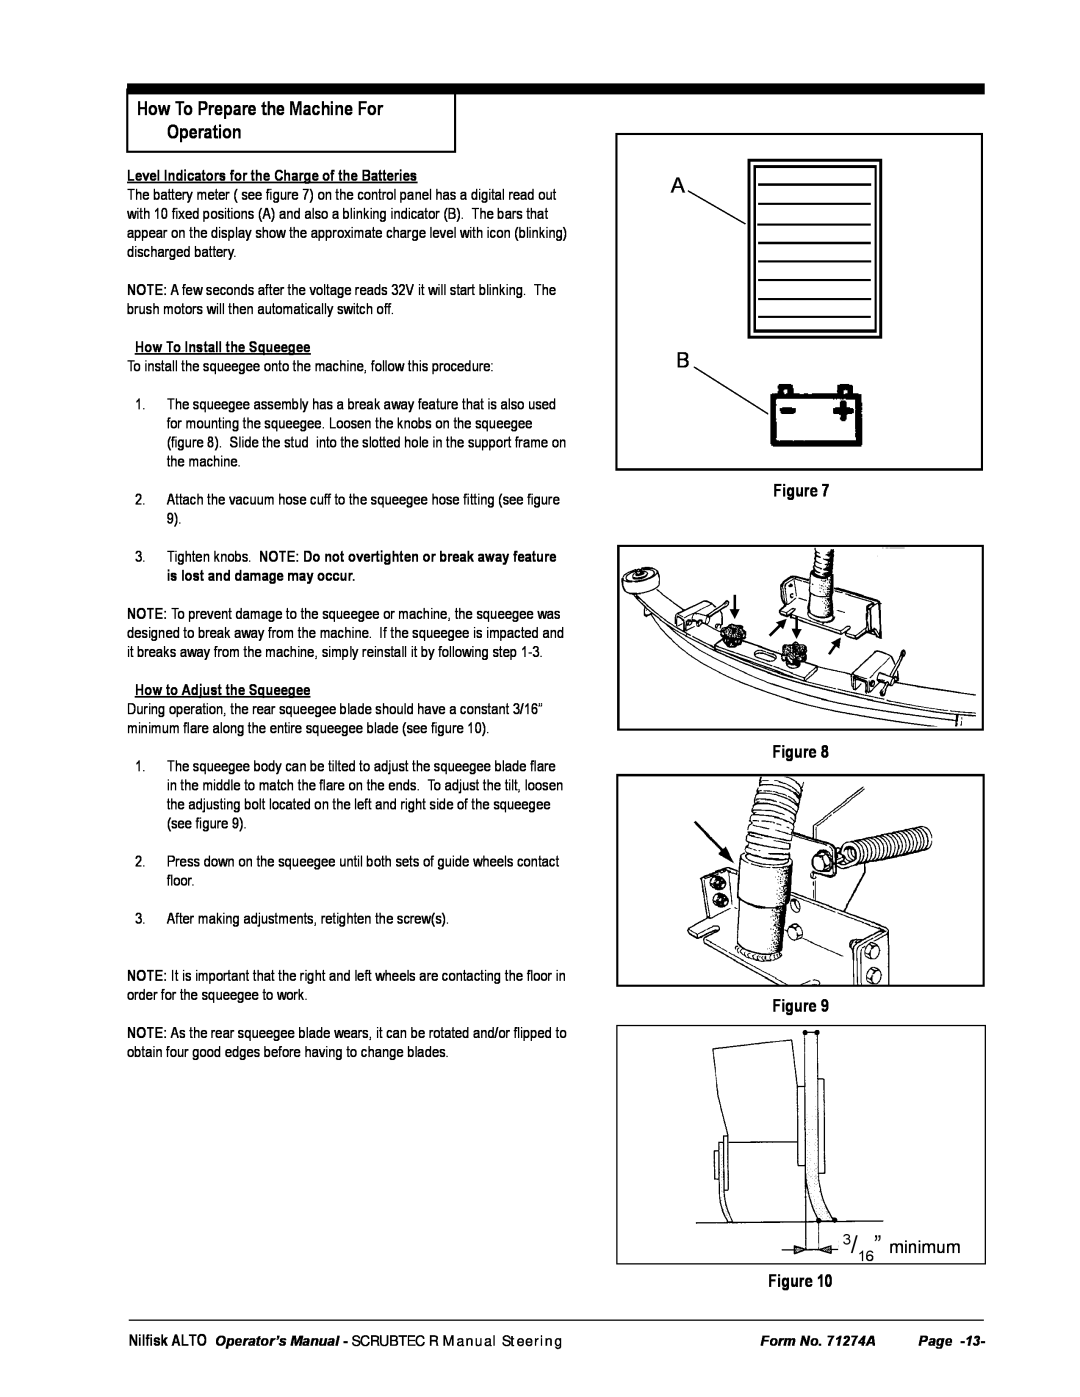 Nilfisk-ALTO 571, 586 manual How To Prepare the Machine For Operation, 3/16” minimum 